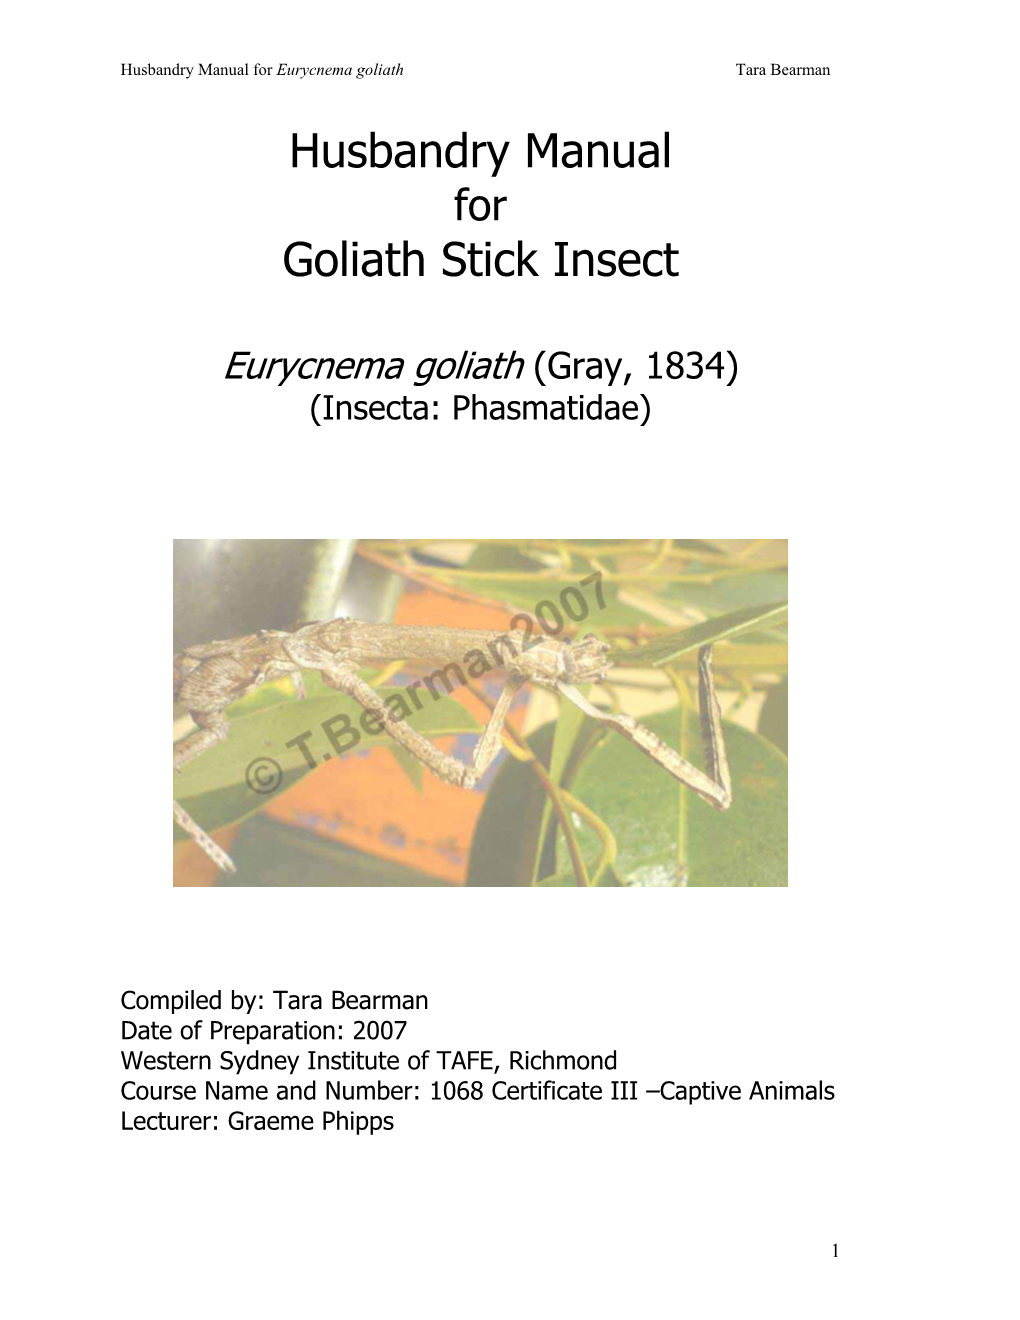 Goliath Stick Insect